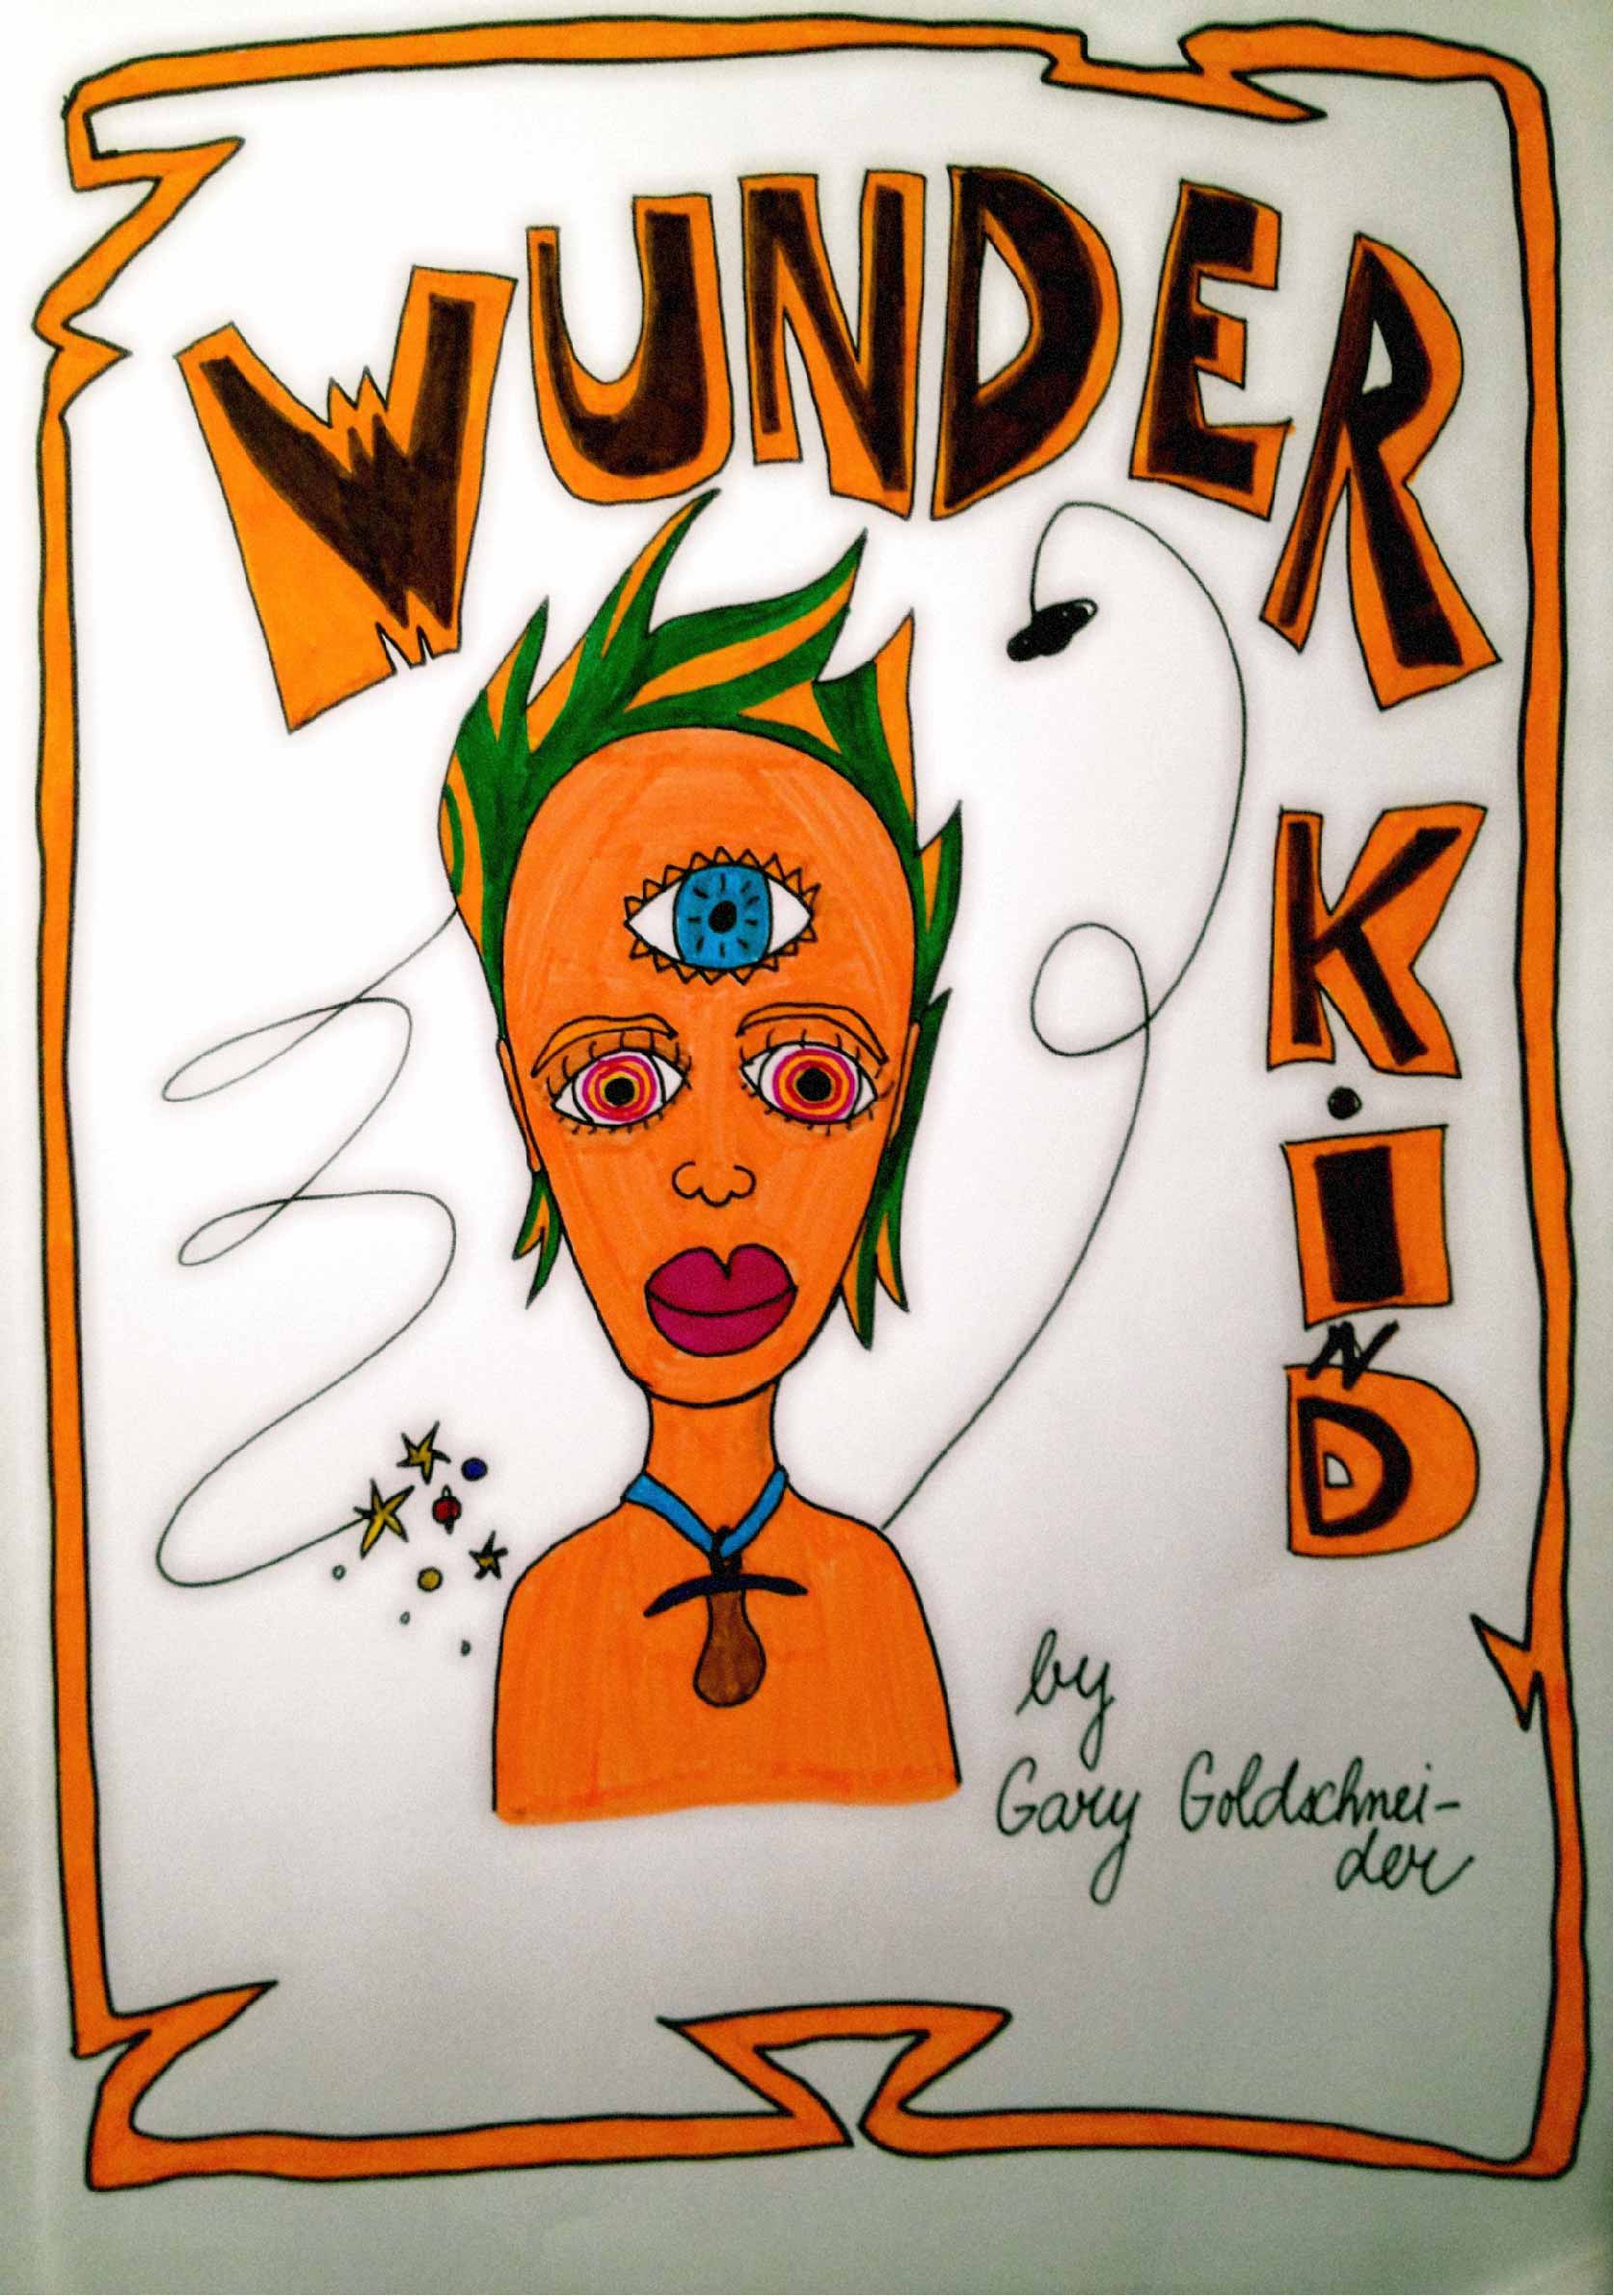 "Wunderkind" by Gary Goldschneider cover by LuLu Lightning